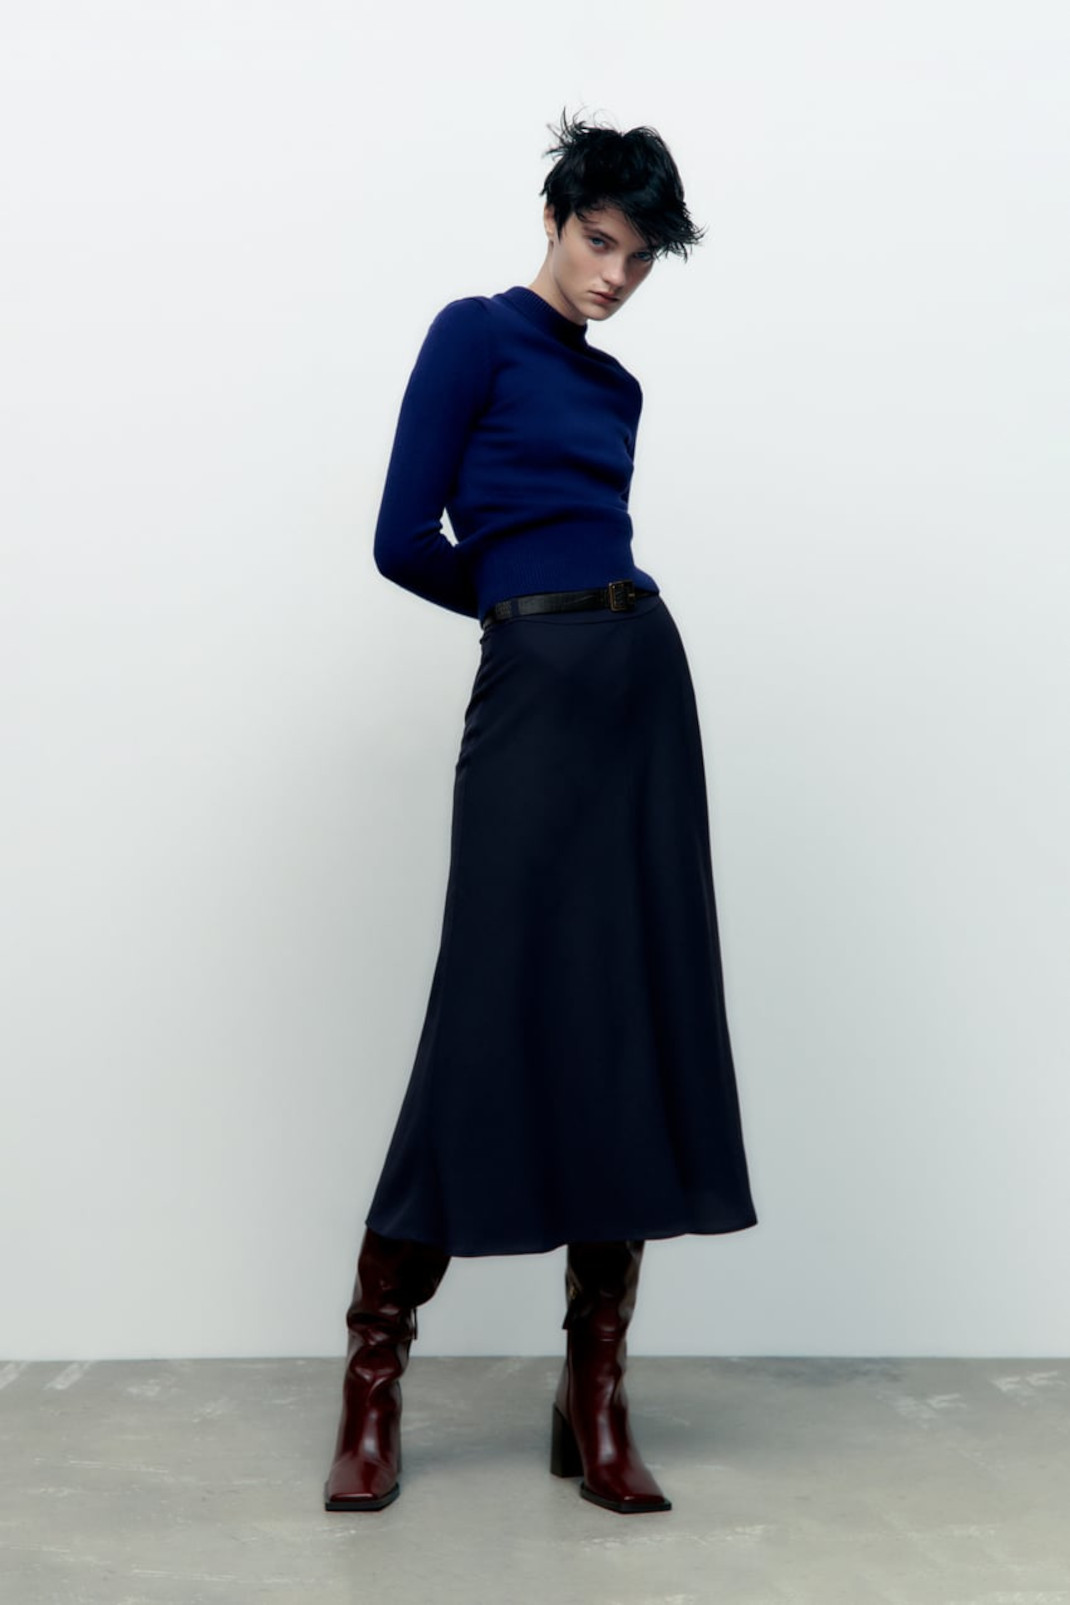 H Ελένη Μενεγάκη με απίθανη φούστα από τα Zara και φλατ μπότες 